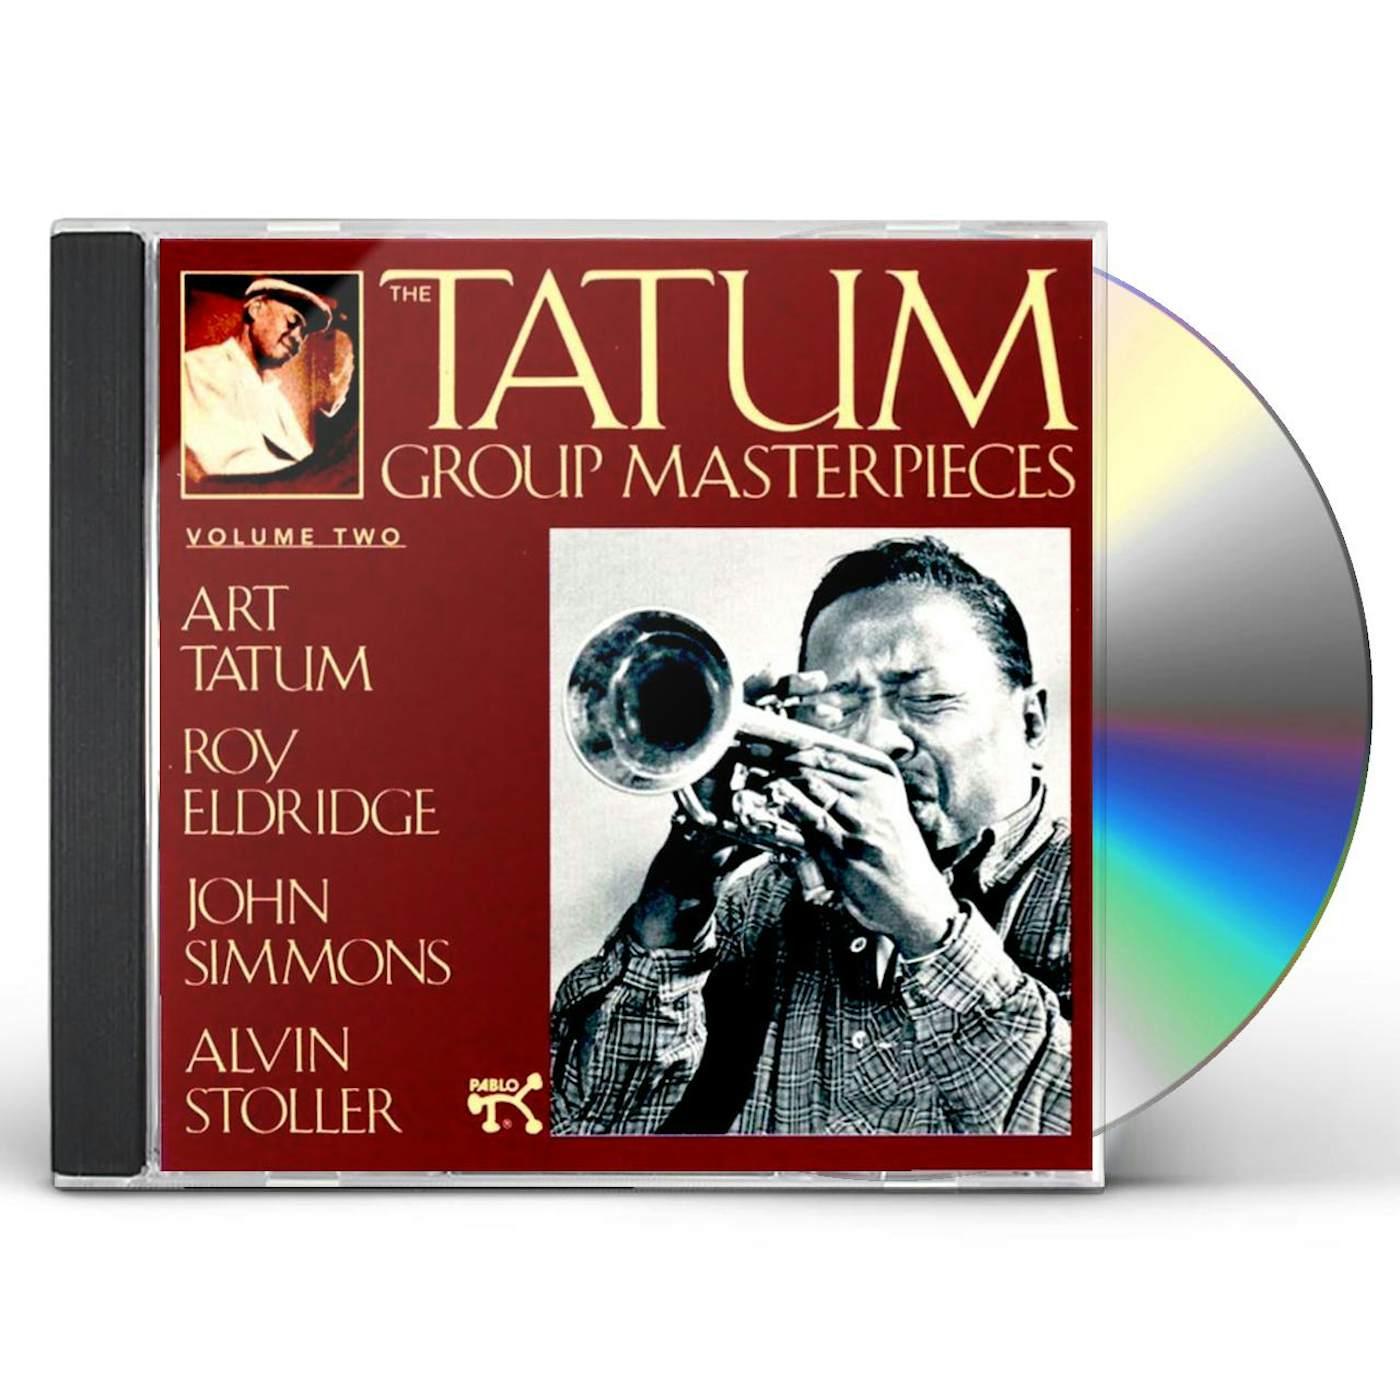 Art Tatum TATUM GROUP MASTERPIECES VOL.2 CD